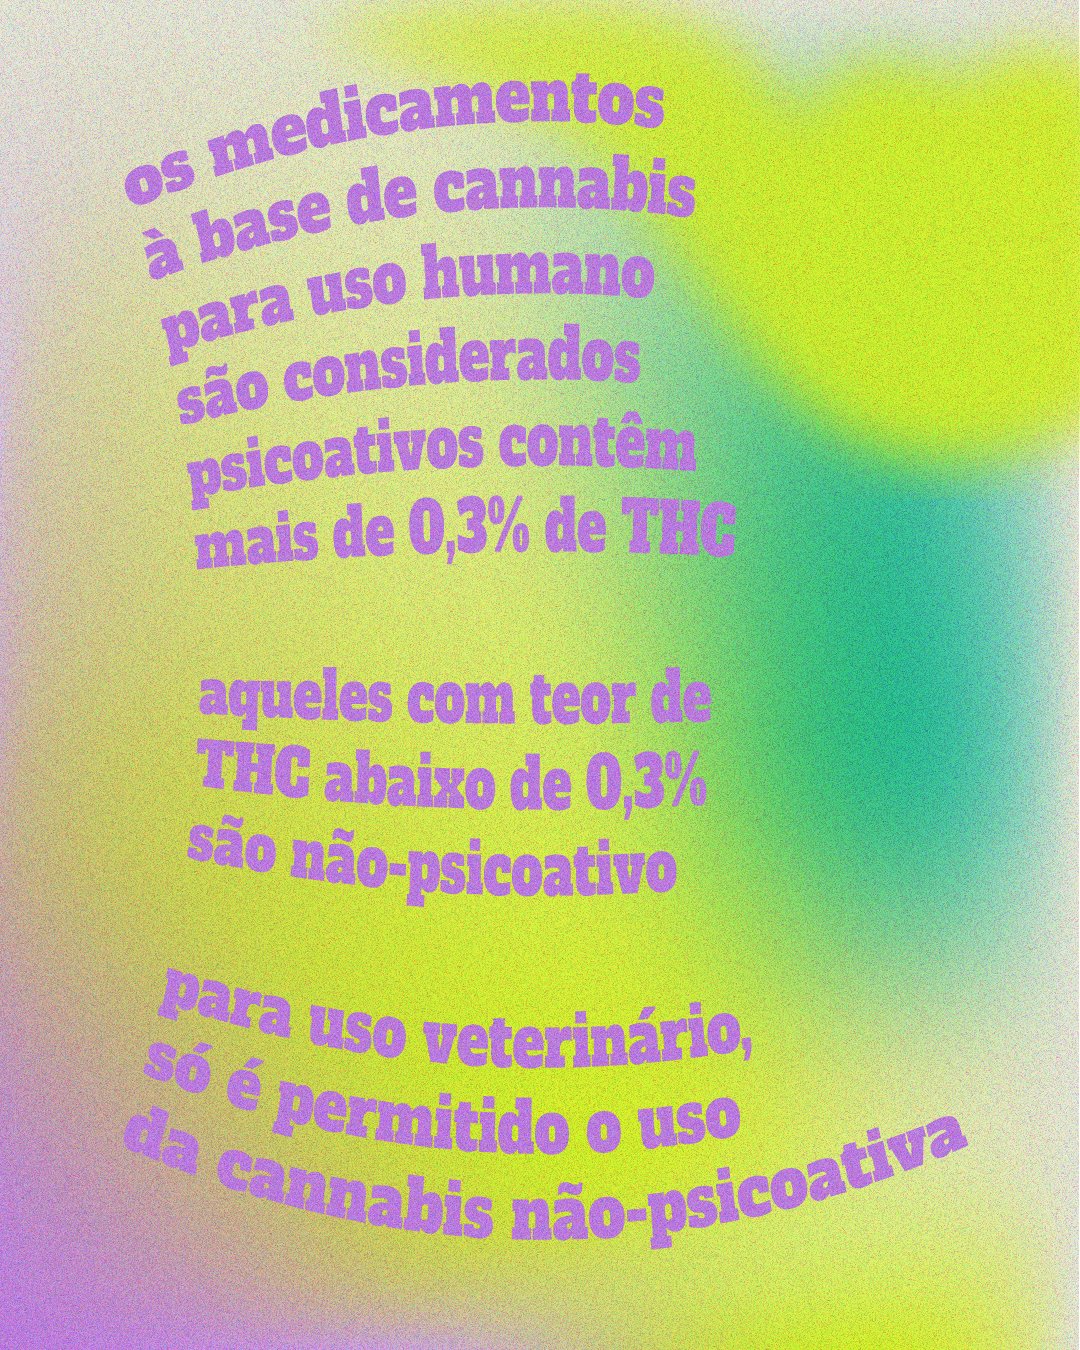 os medicamentos à base de cannabis para uso humano são considerados psicoativos contêmmais de 0,3% de THC aqueles com teor deTHC abaixo de 0,3% são não-psicoativo para uso veterinário, só é permitido o uso da cannabis não-psicoativa